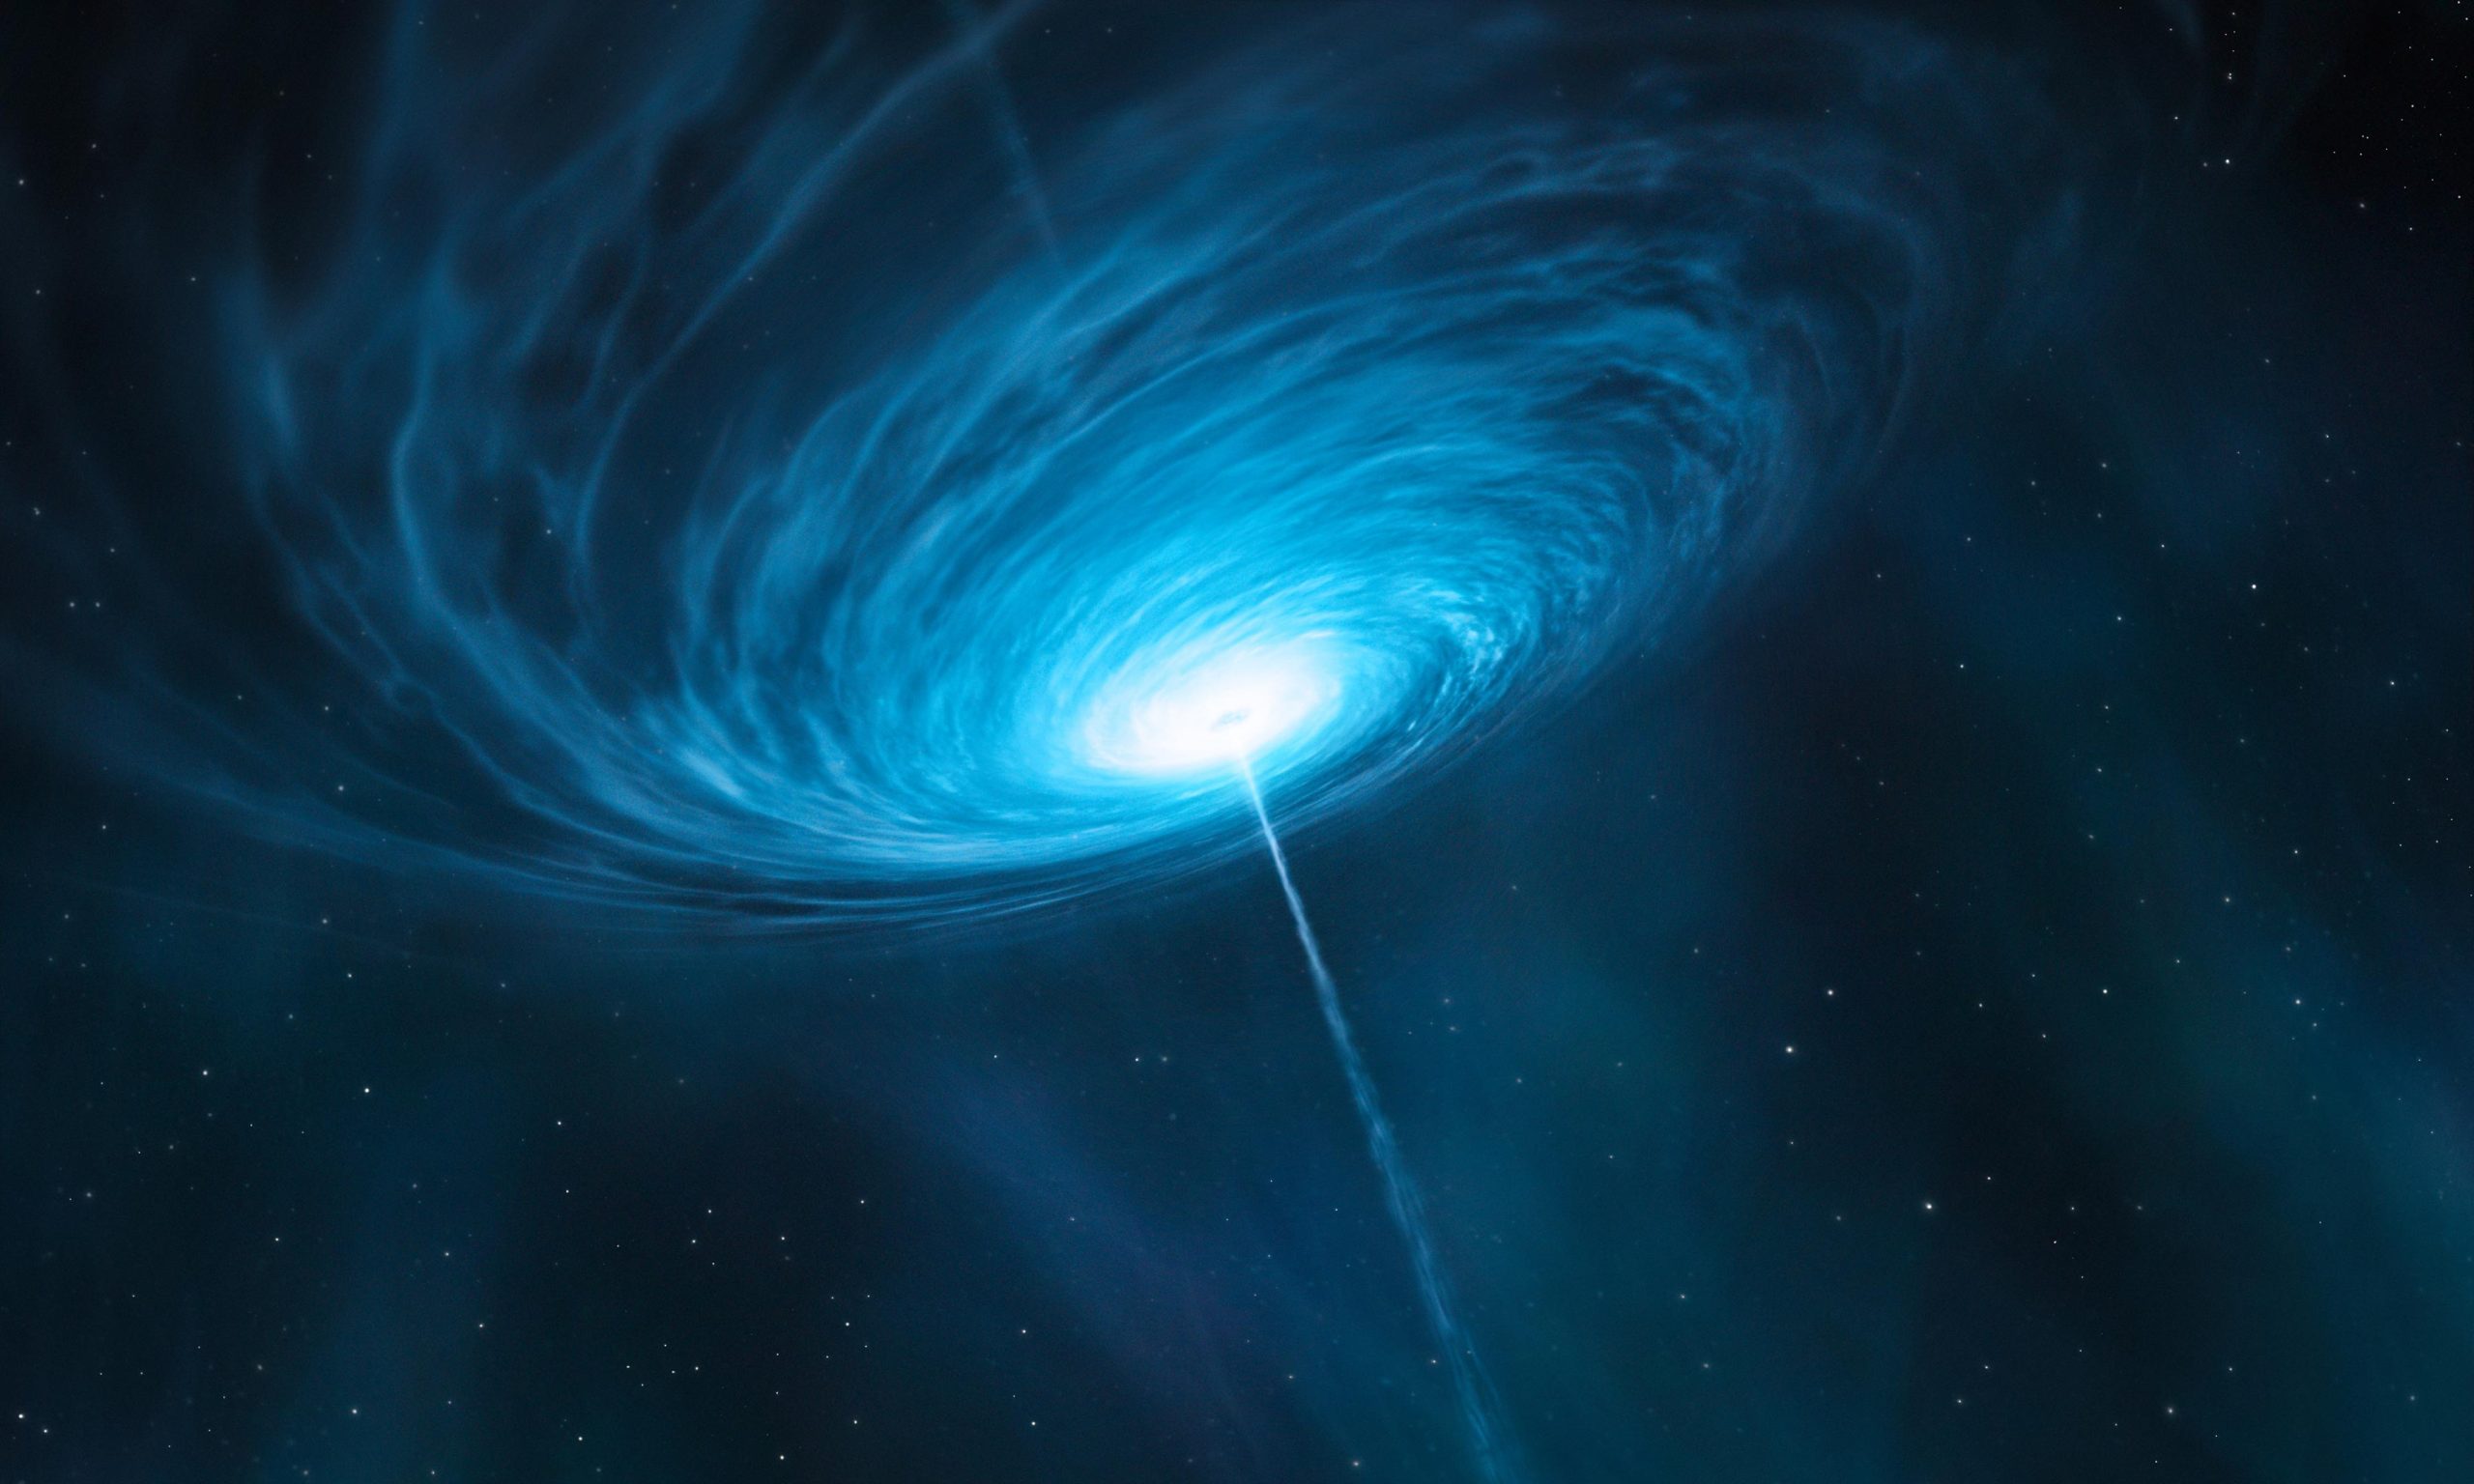 Quasar 3C 279 Shown in Unprecedented Sharpness